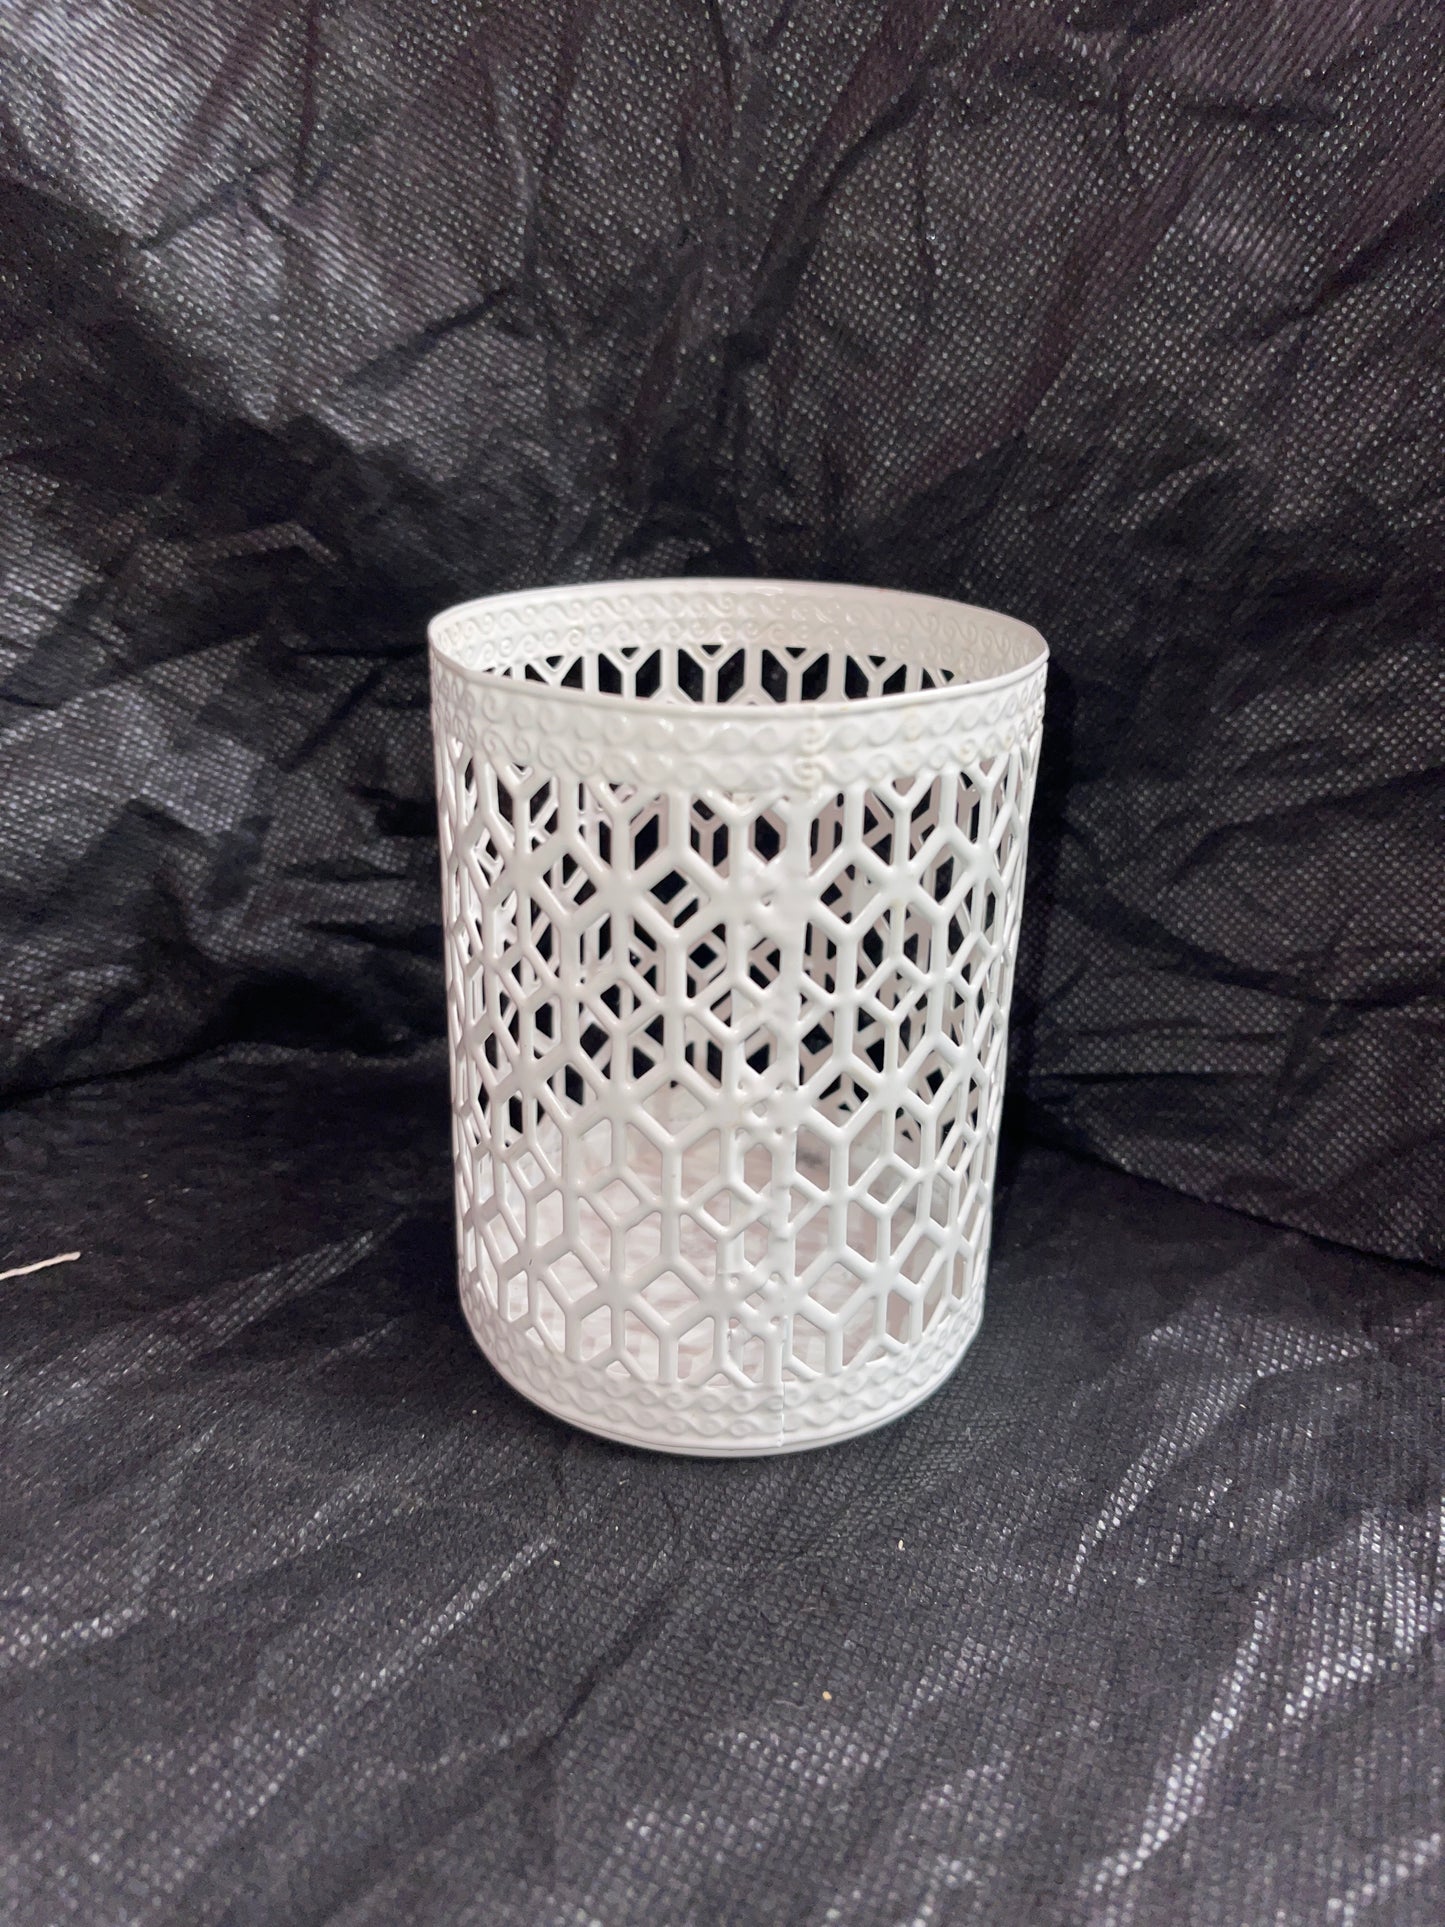 Rental vintage white metal lace cups